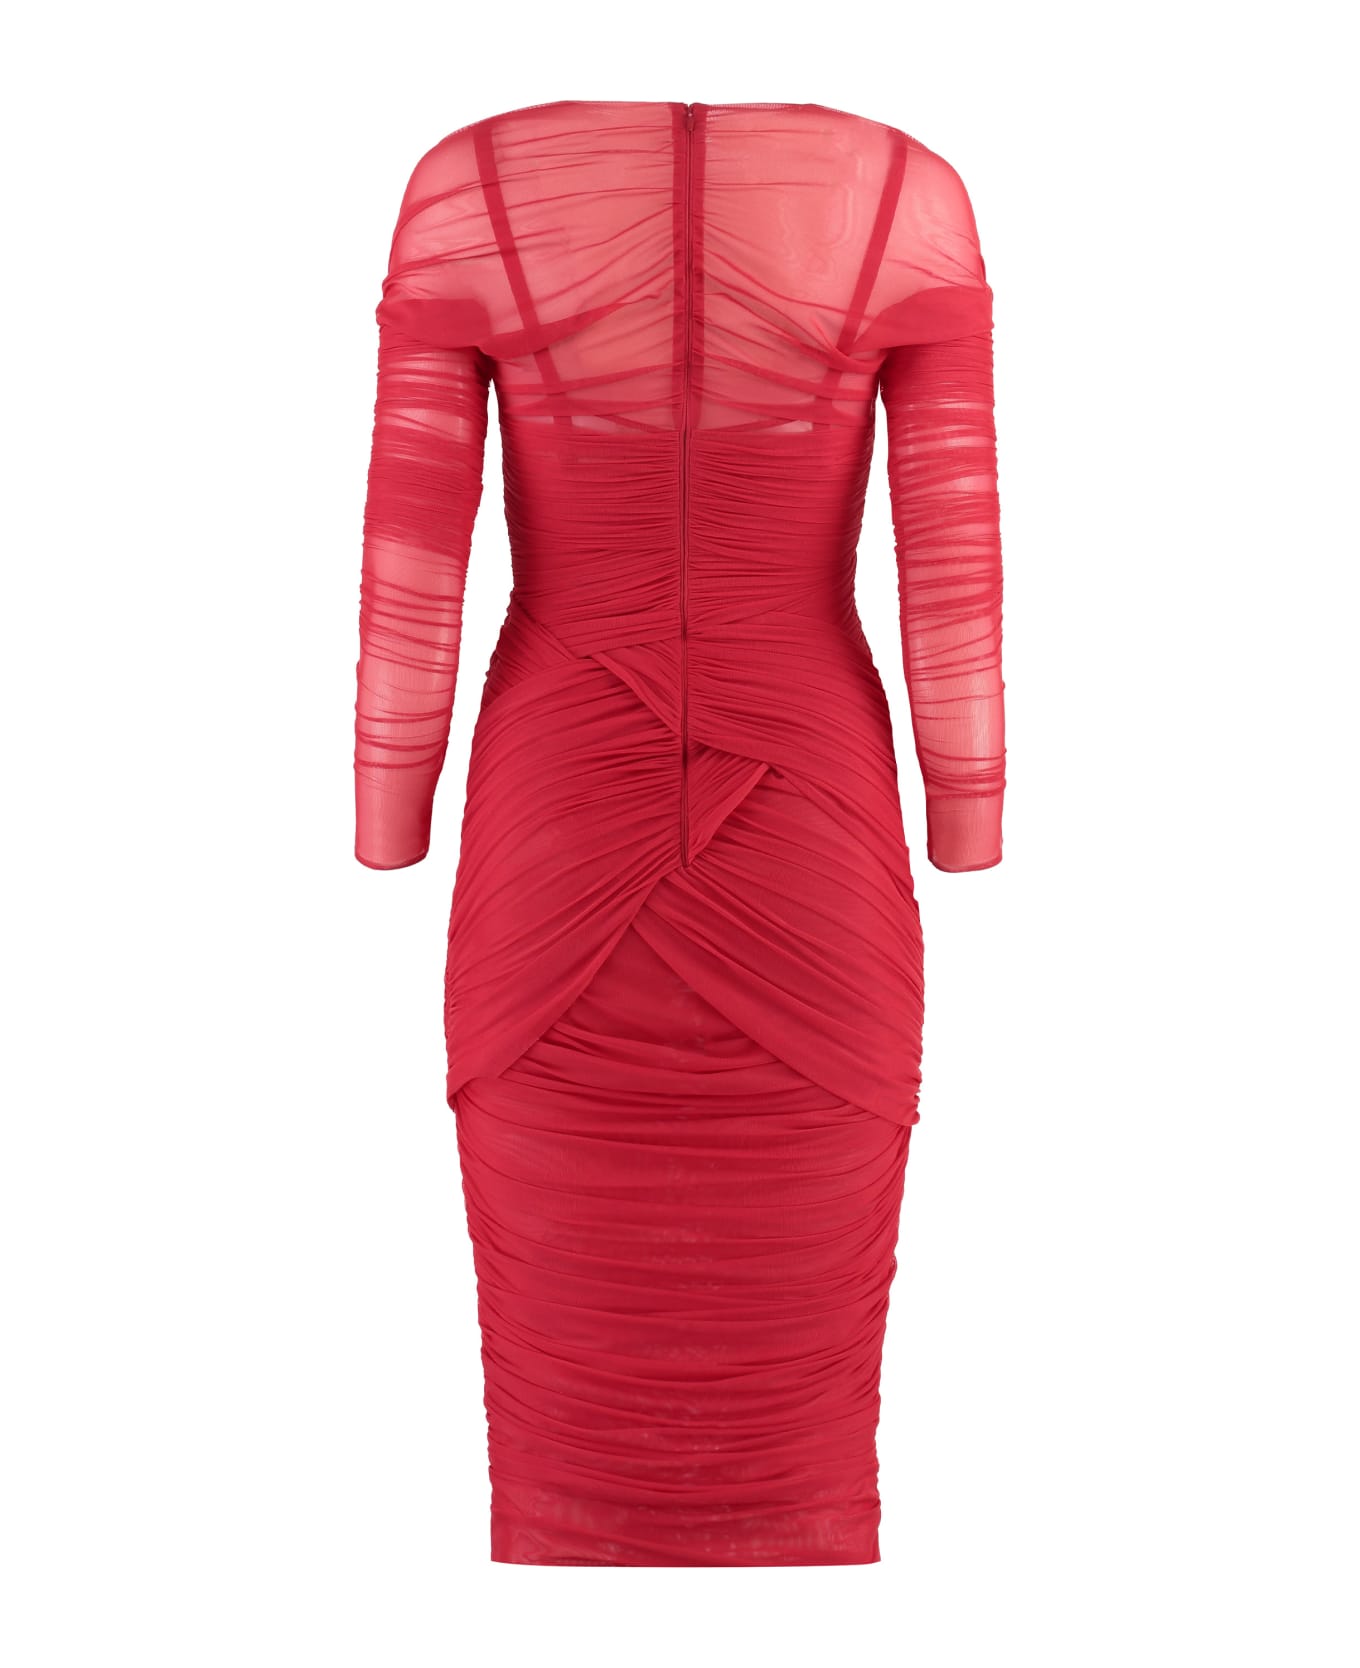 Dolce & Gabbana Draped Dress - red